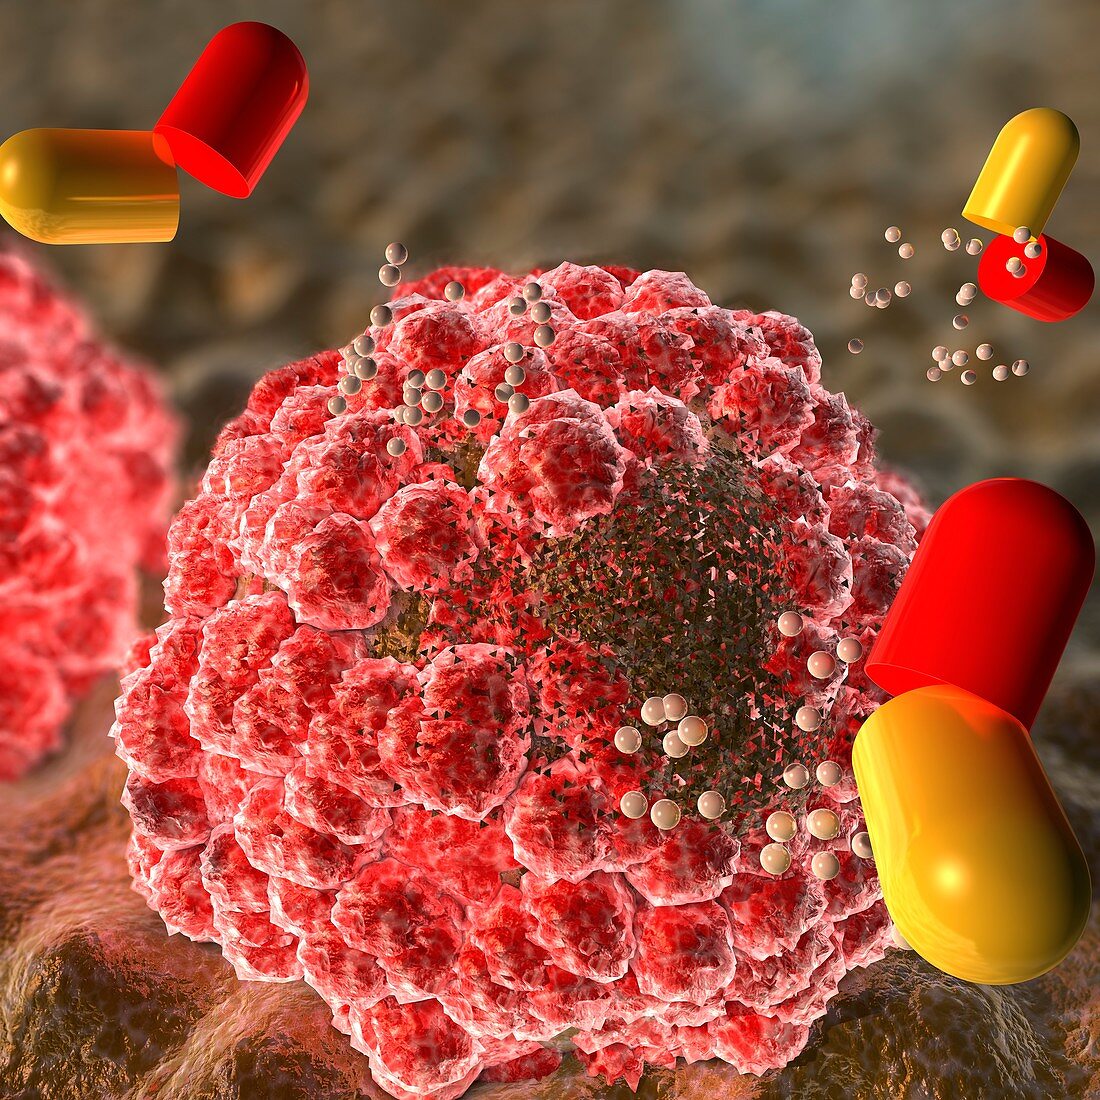 Anti-cancer nanoparticles, illustration